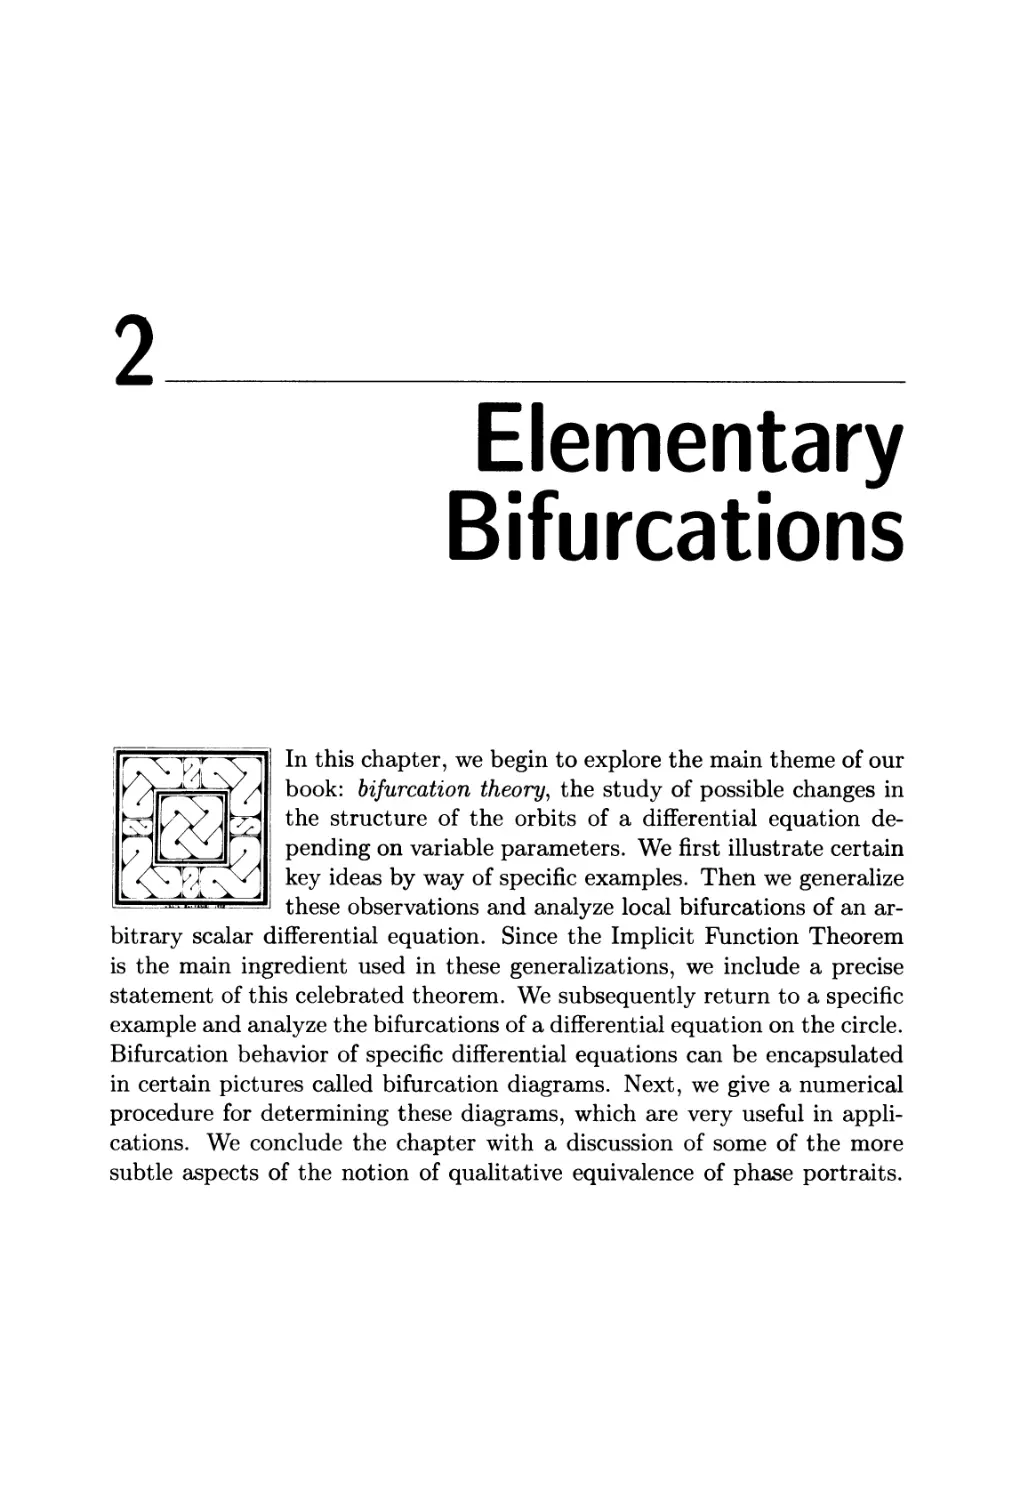 Chapter 2. Elementary Bifurcations